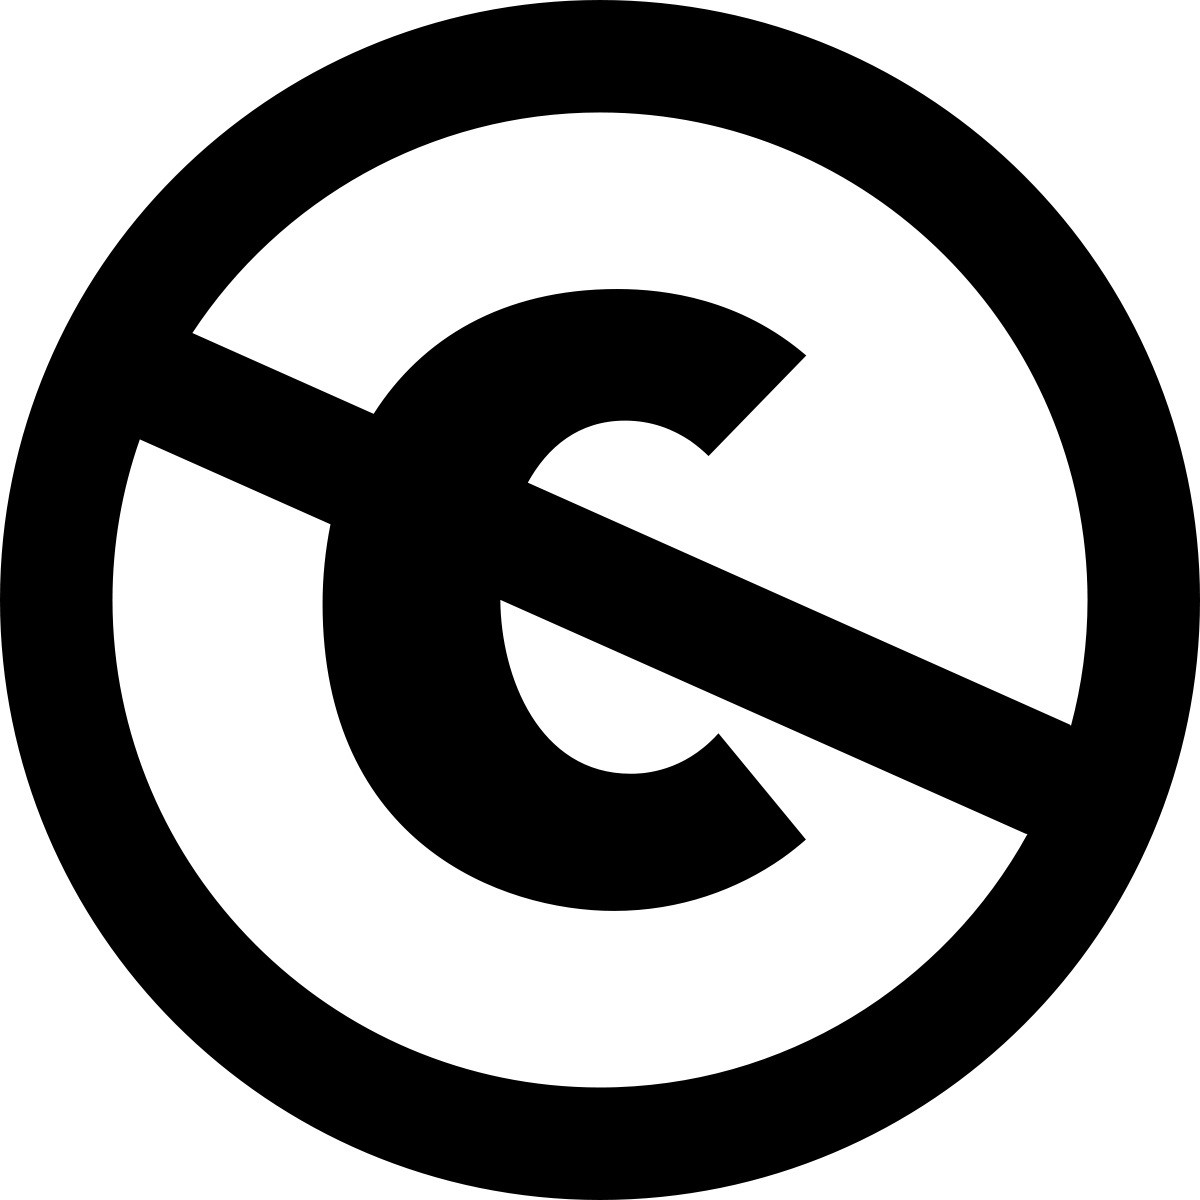 Publiek Domeindag logo